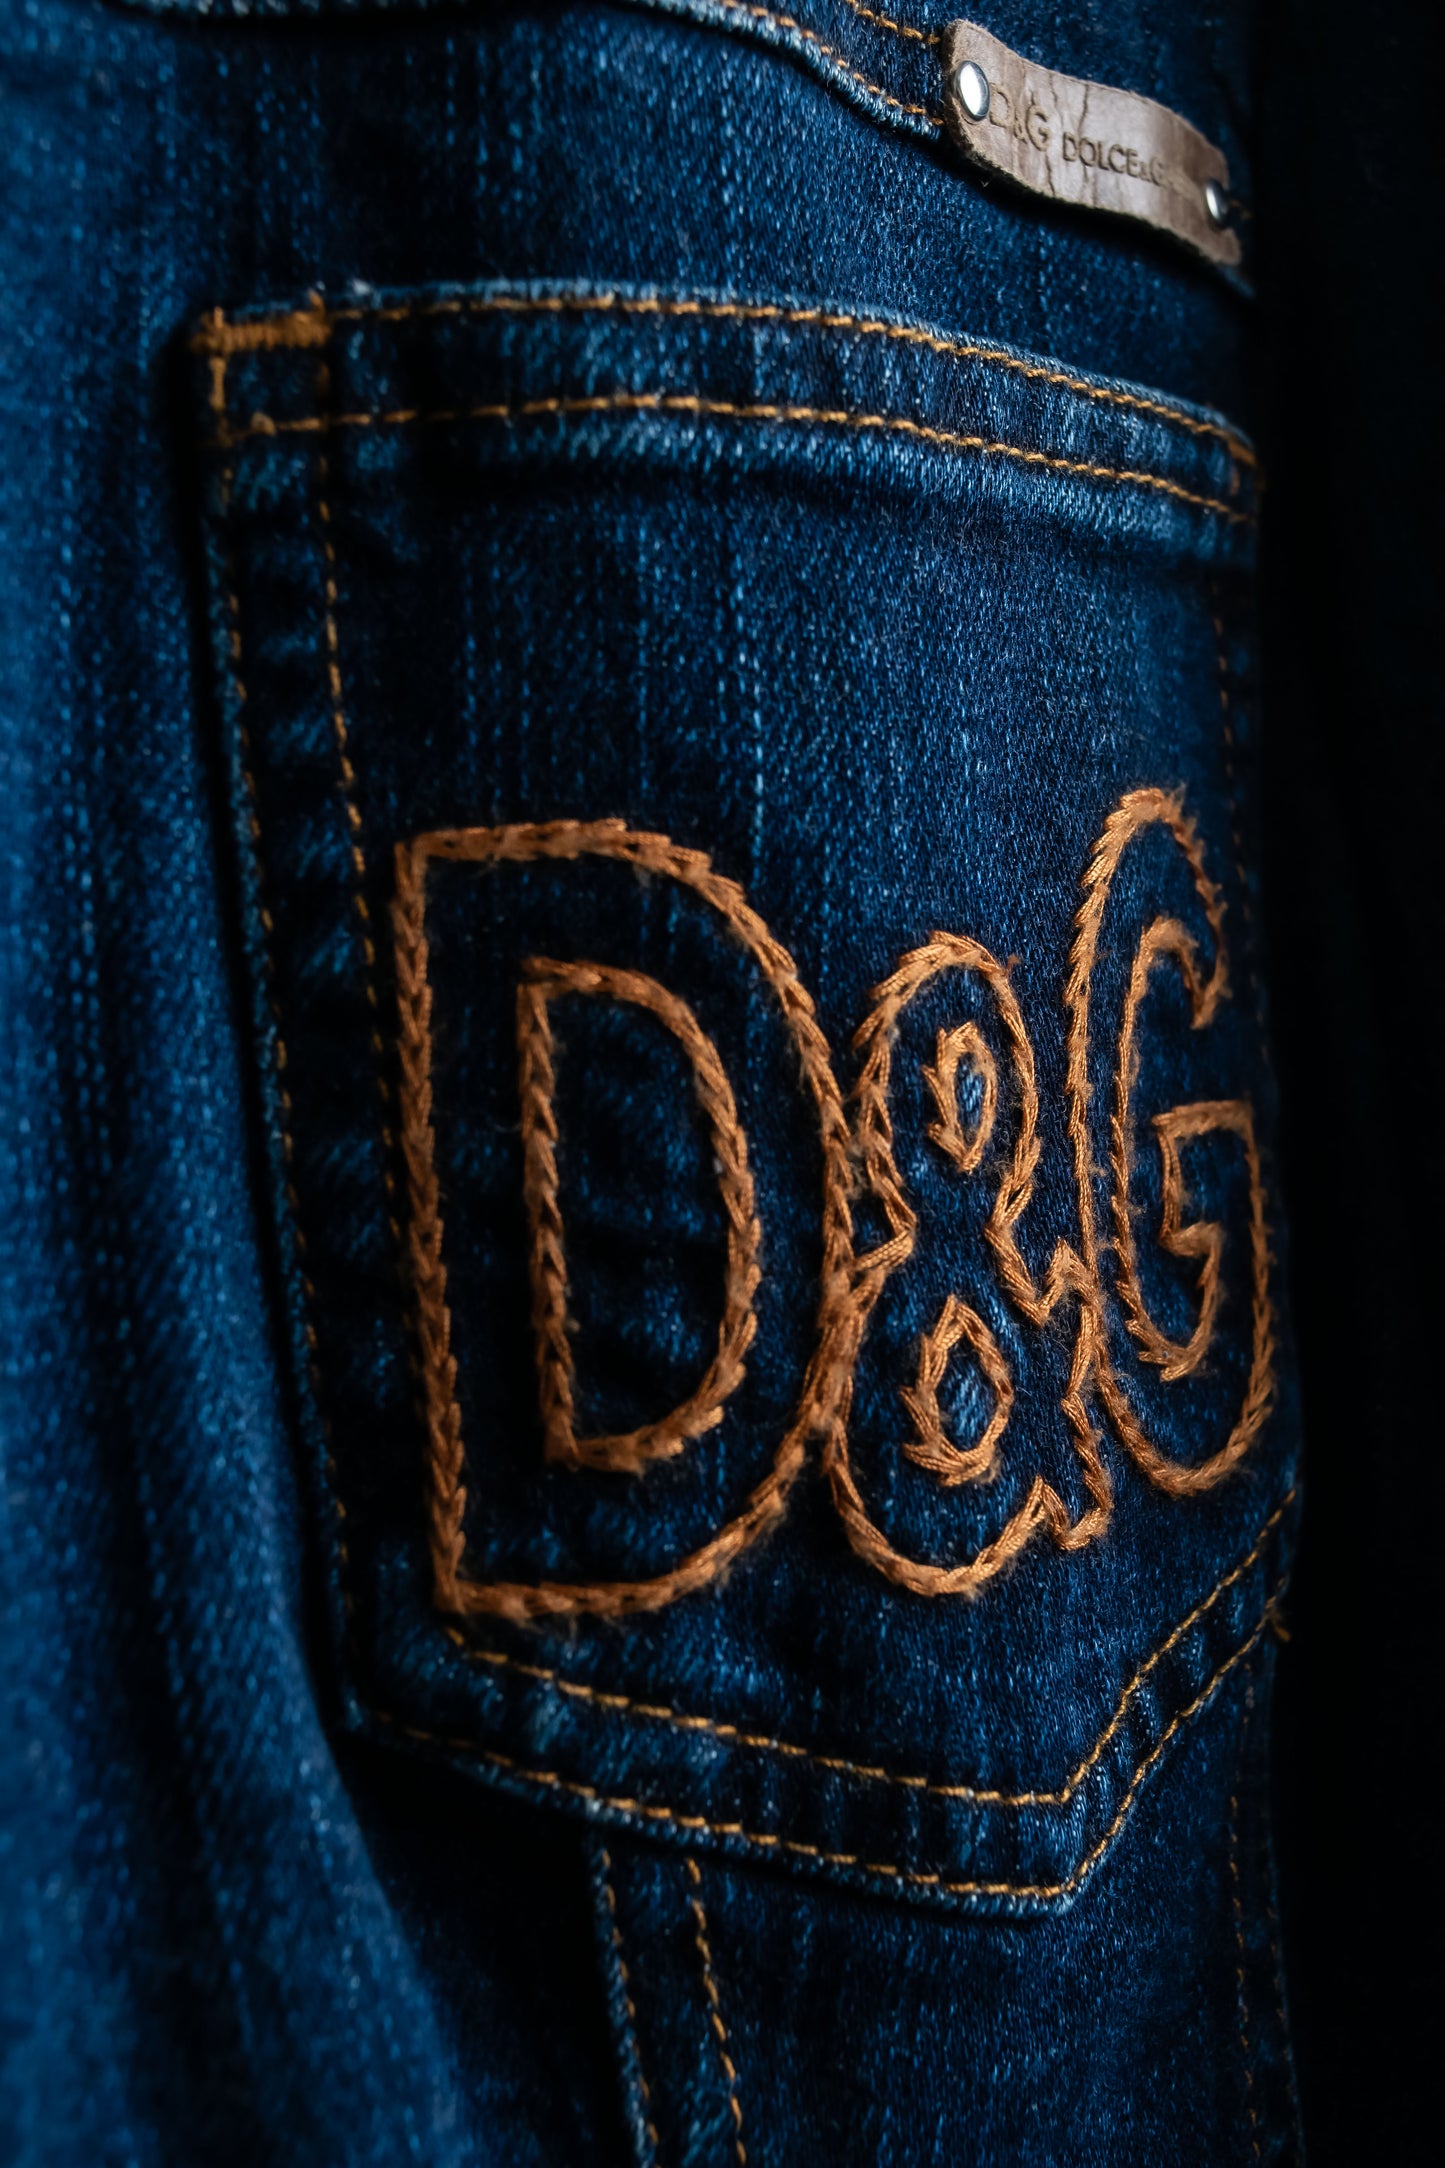 “D&G” Logo embroidery short denim jacket